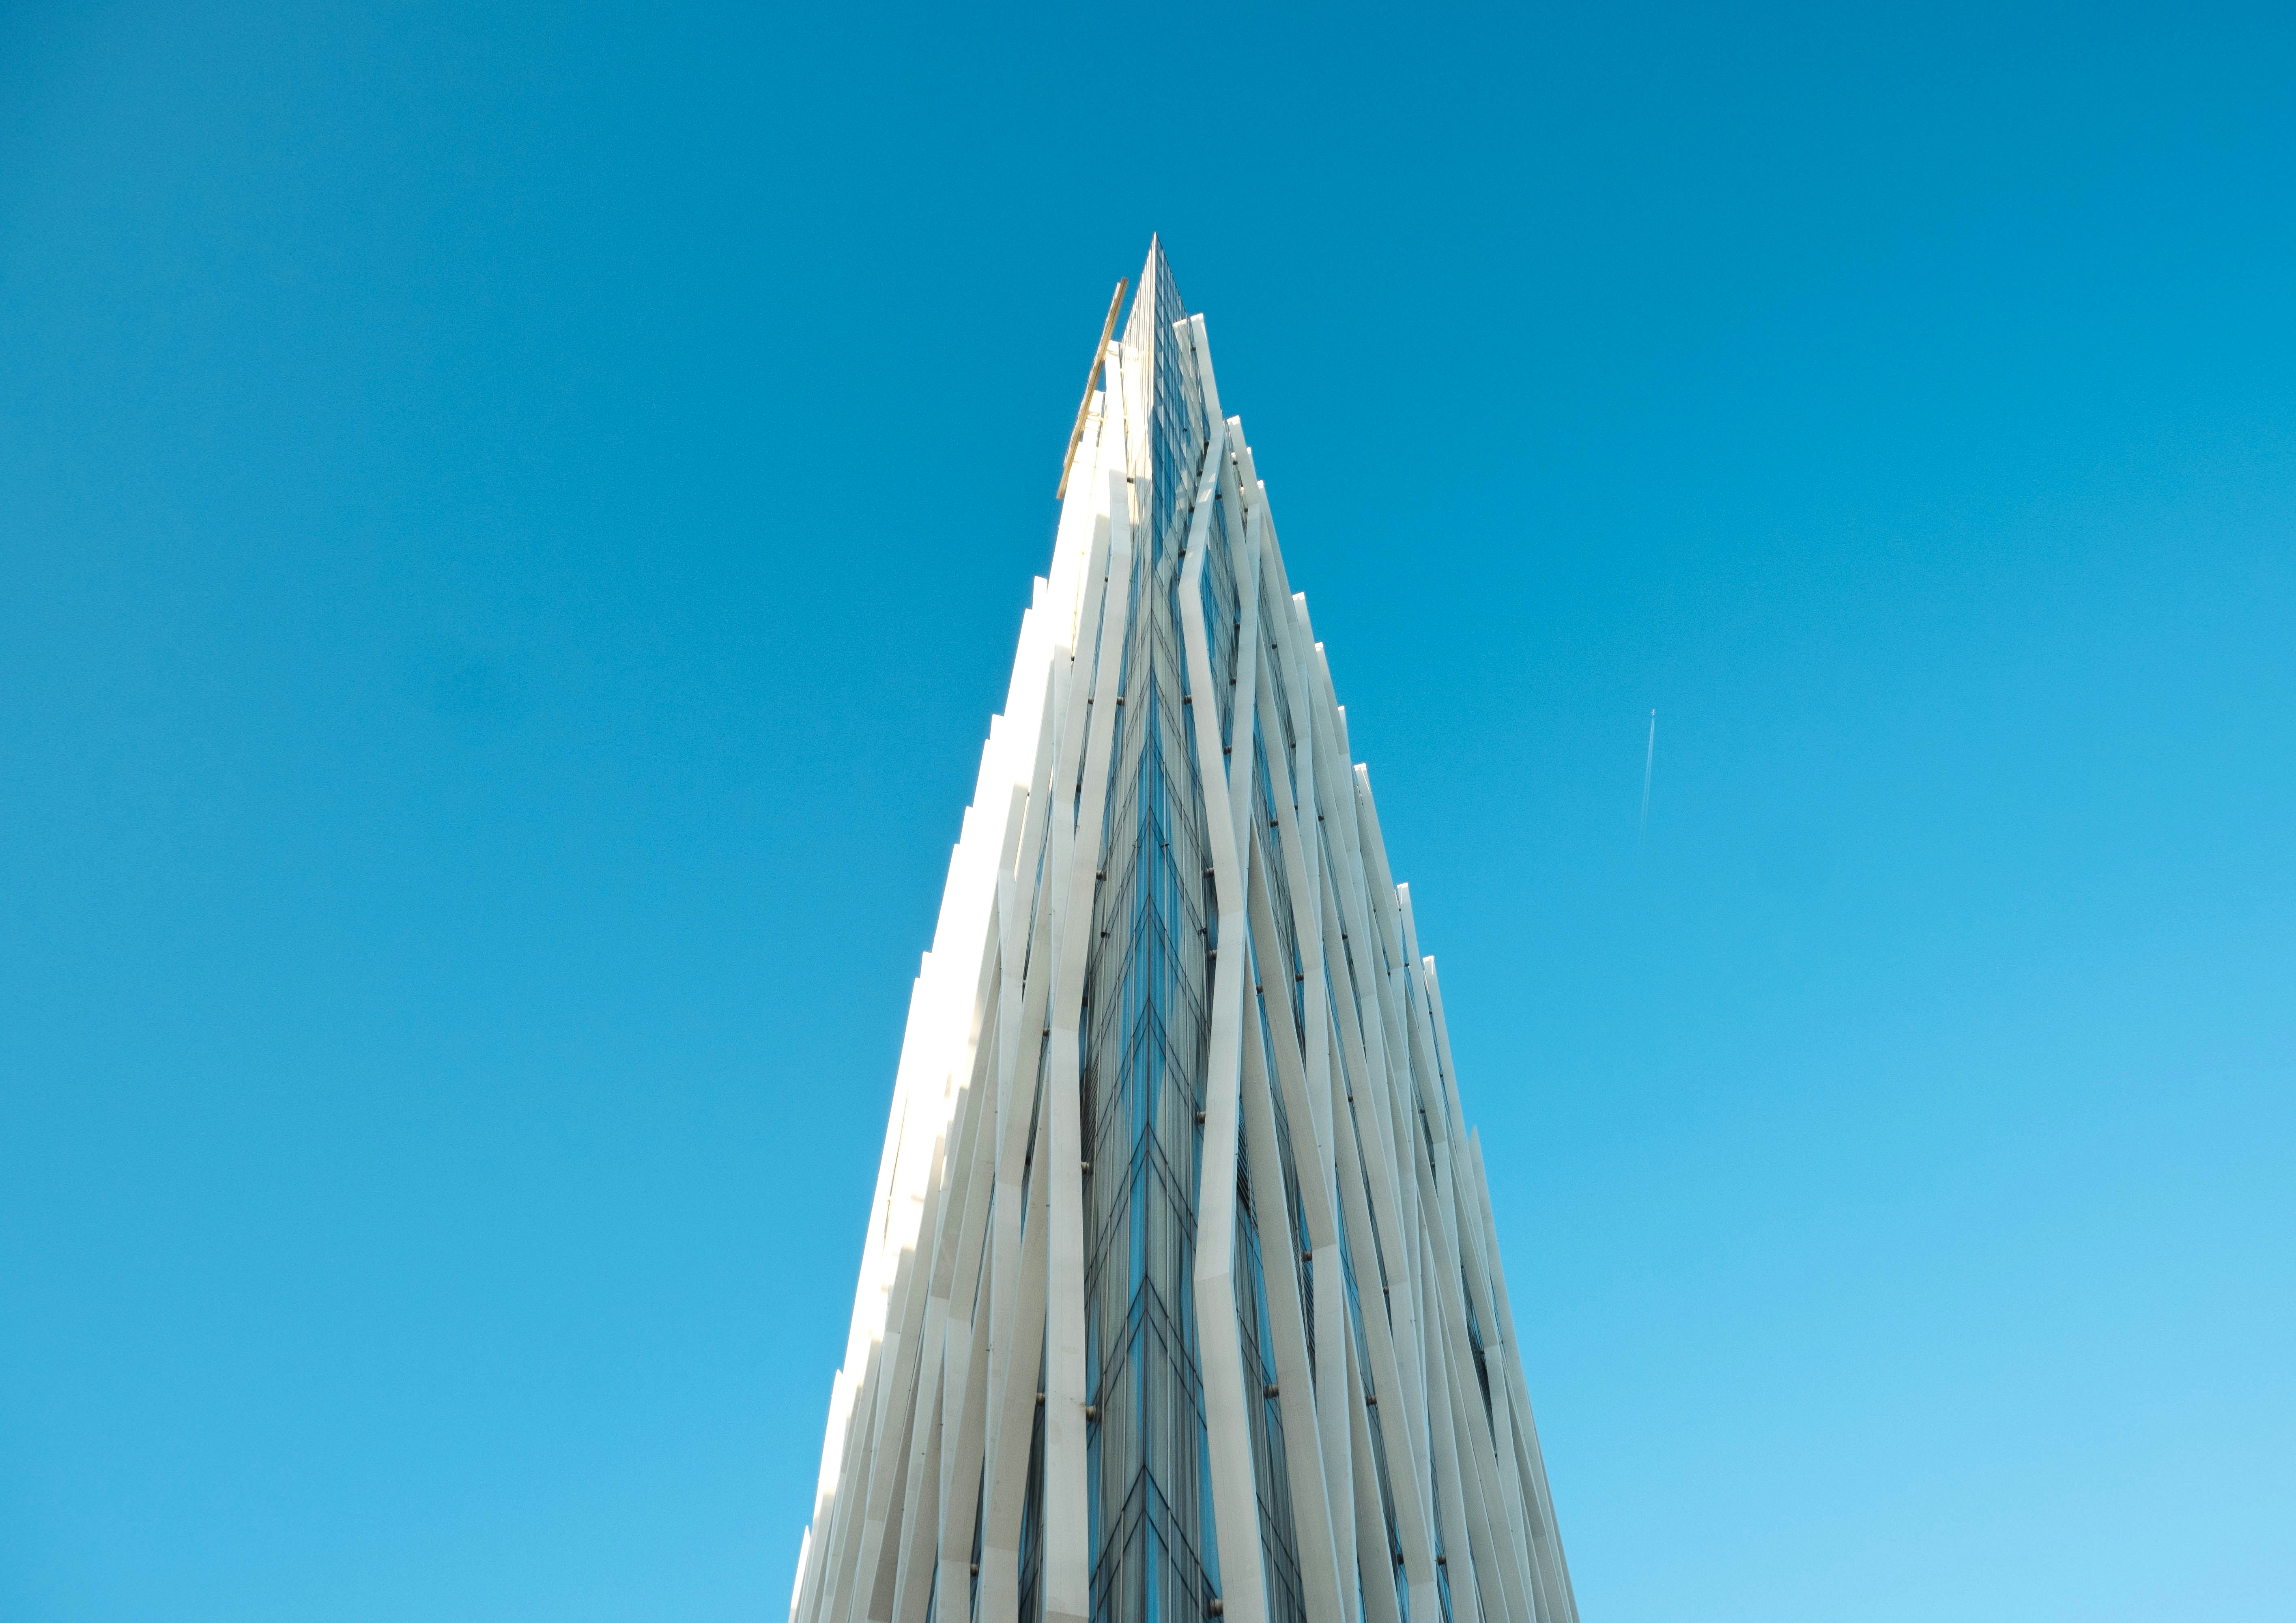 Telefonica tower, Forum - Barcelona